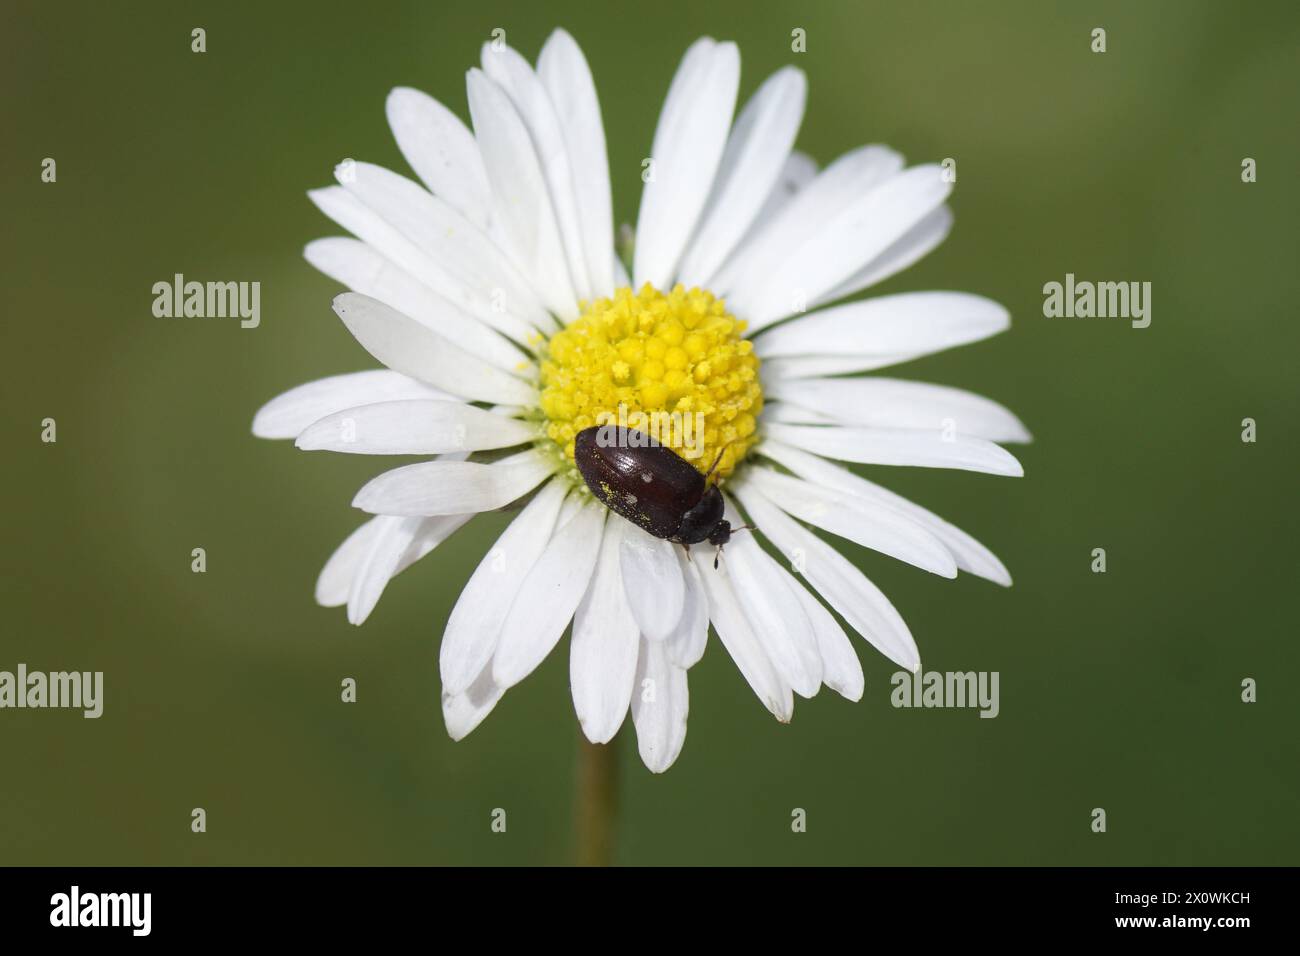 Fur beetle, two-spotted carpet beetle (Attagenus pellio), family Dermestidae on flower of Common daisy, English daisy, Bellis perennis. Dutch garden, Stock Photo